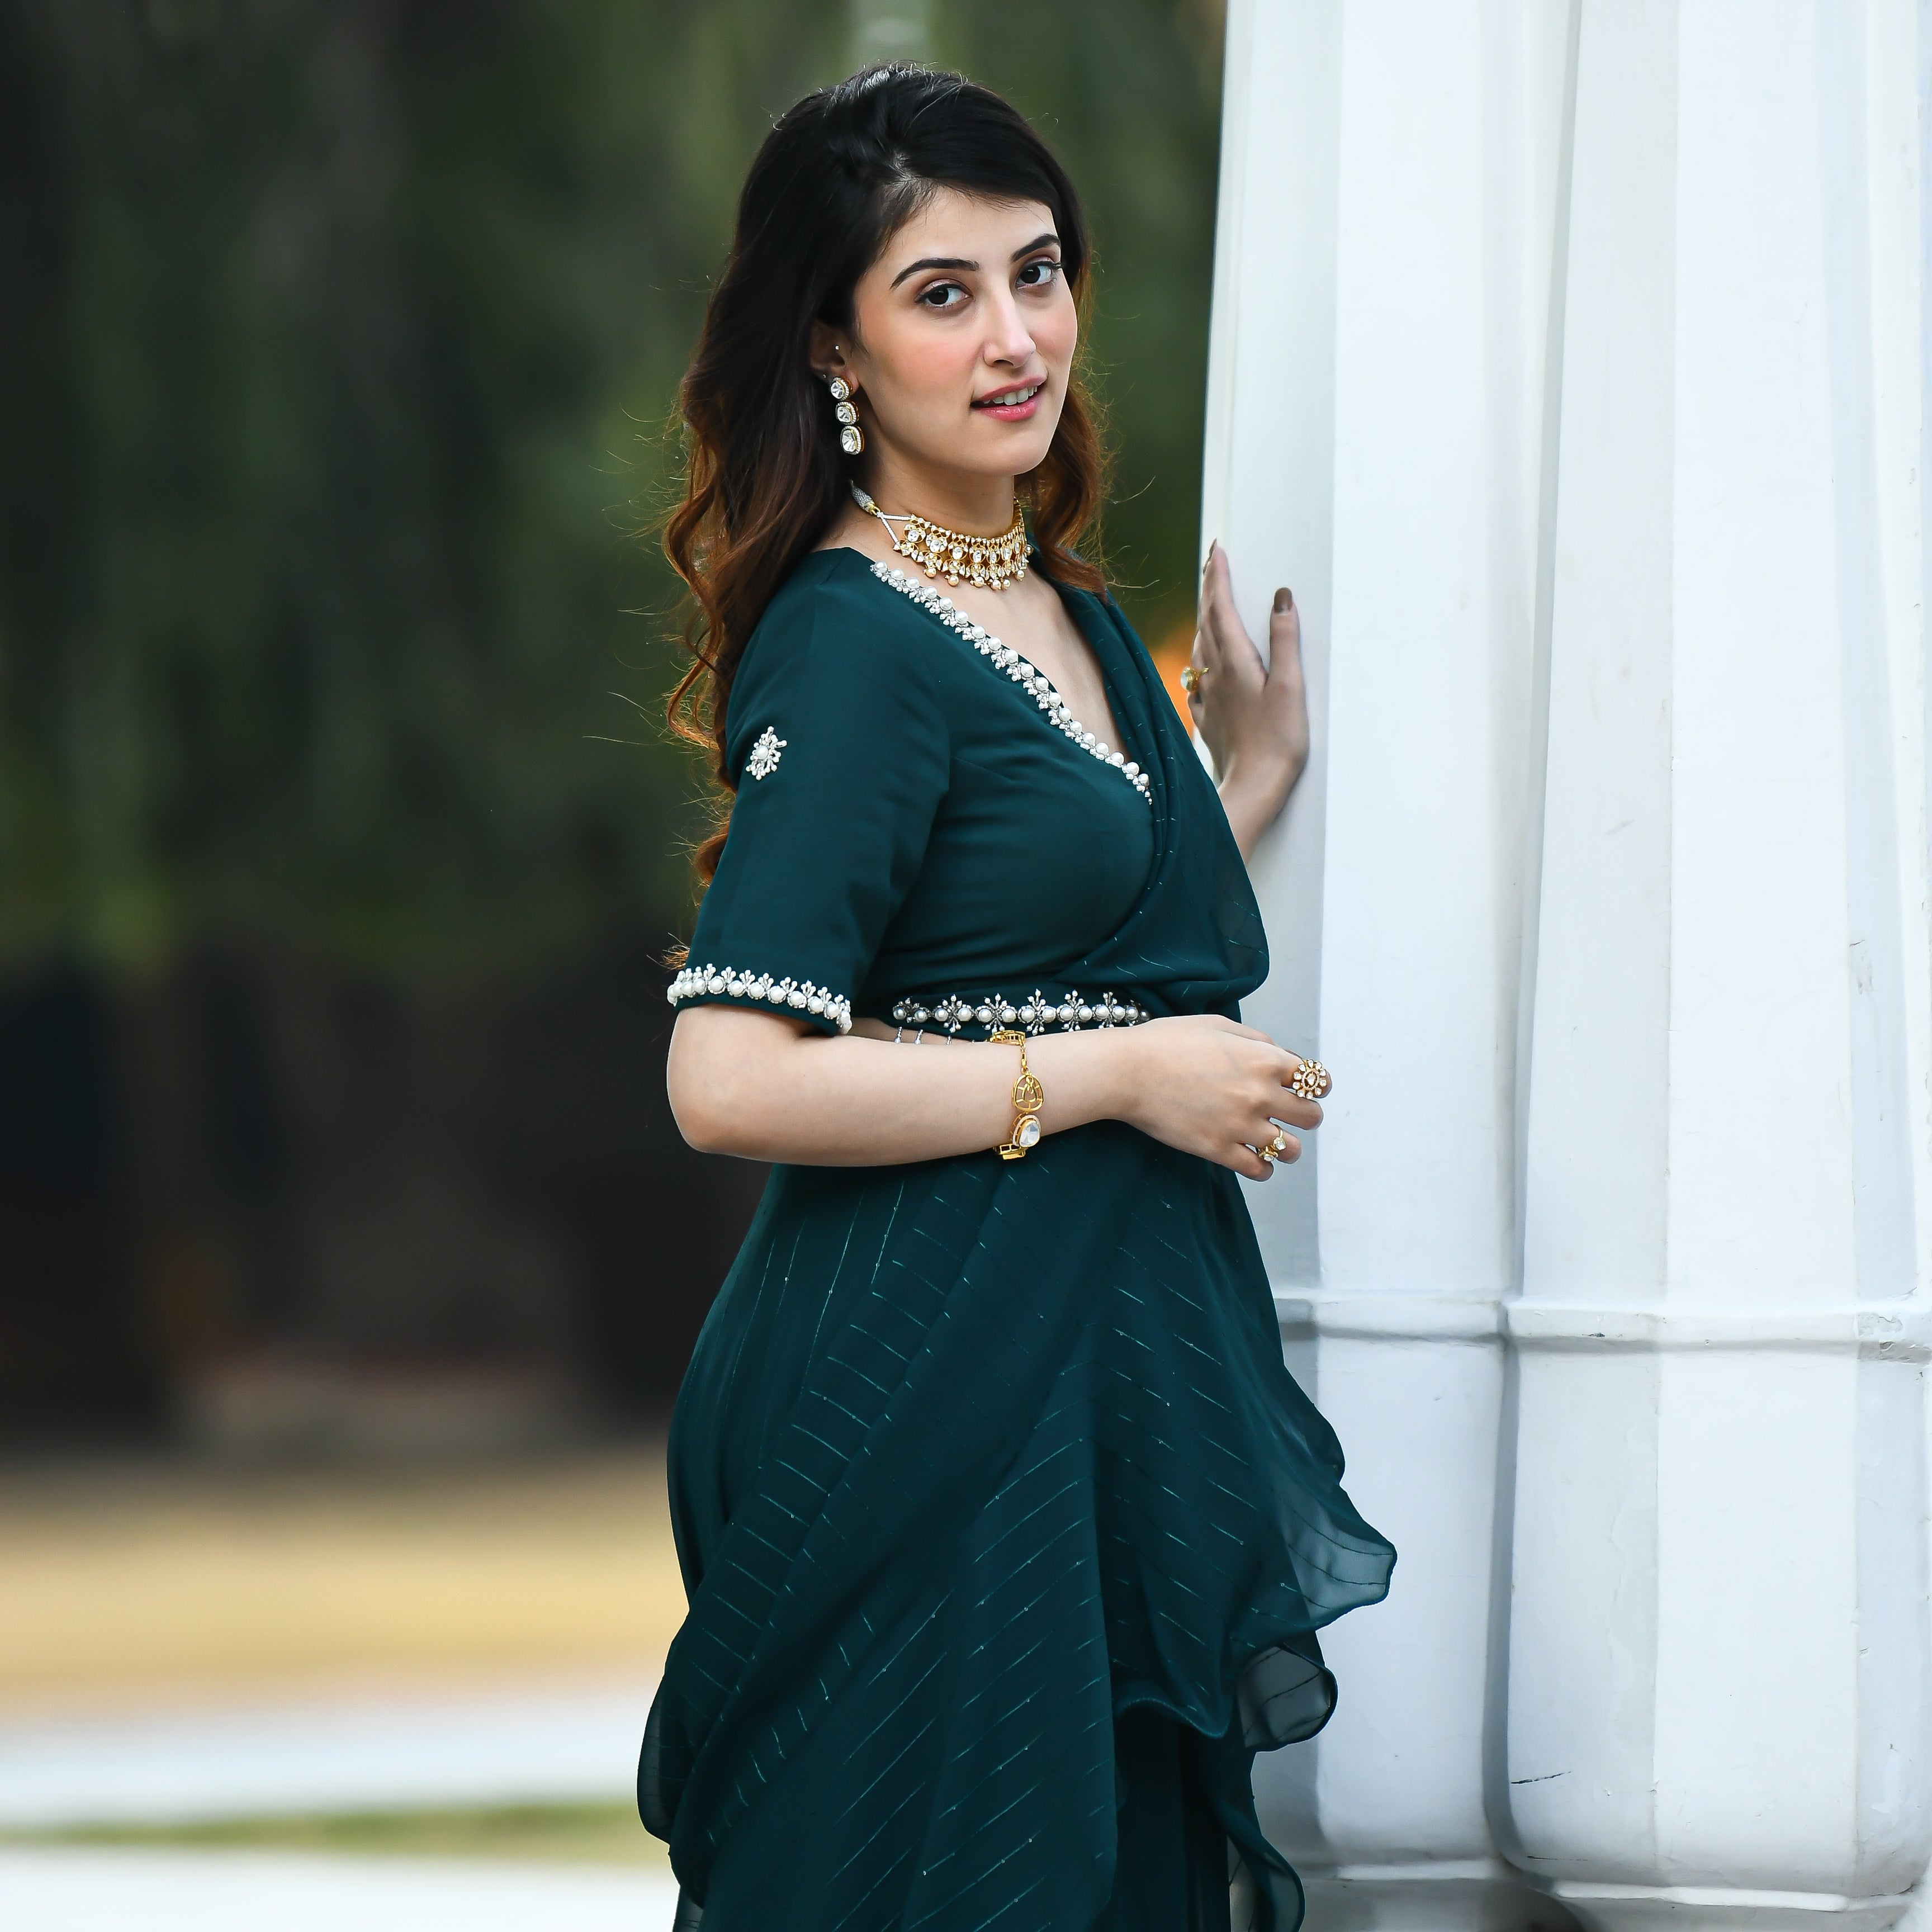 Teal Green Drape Saree for women online